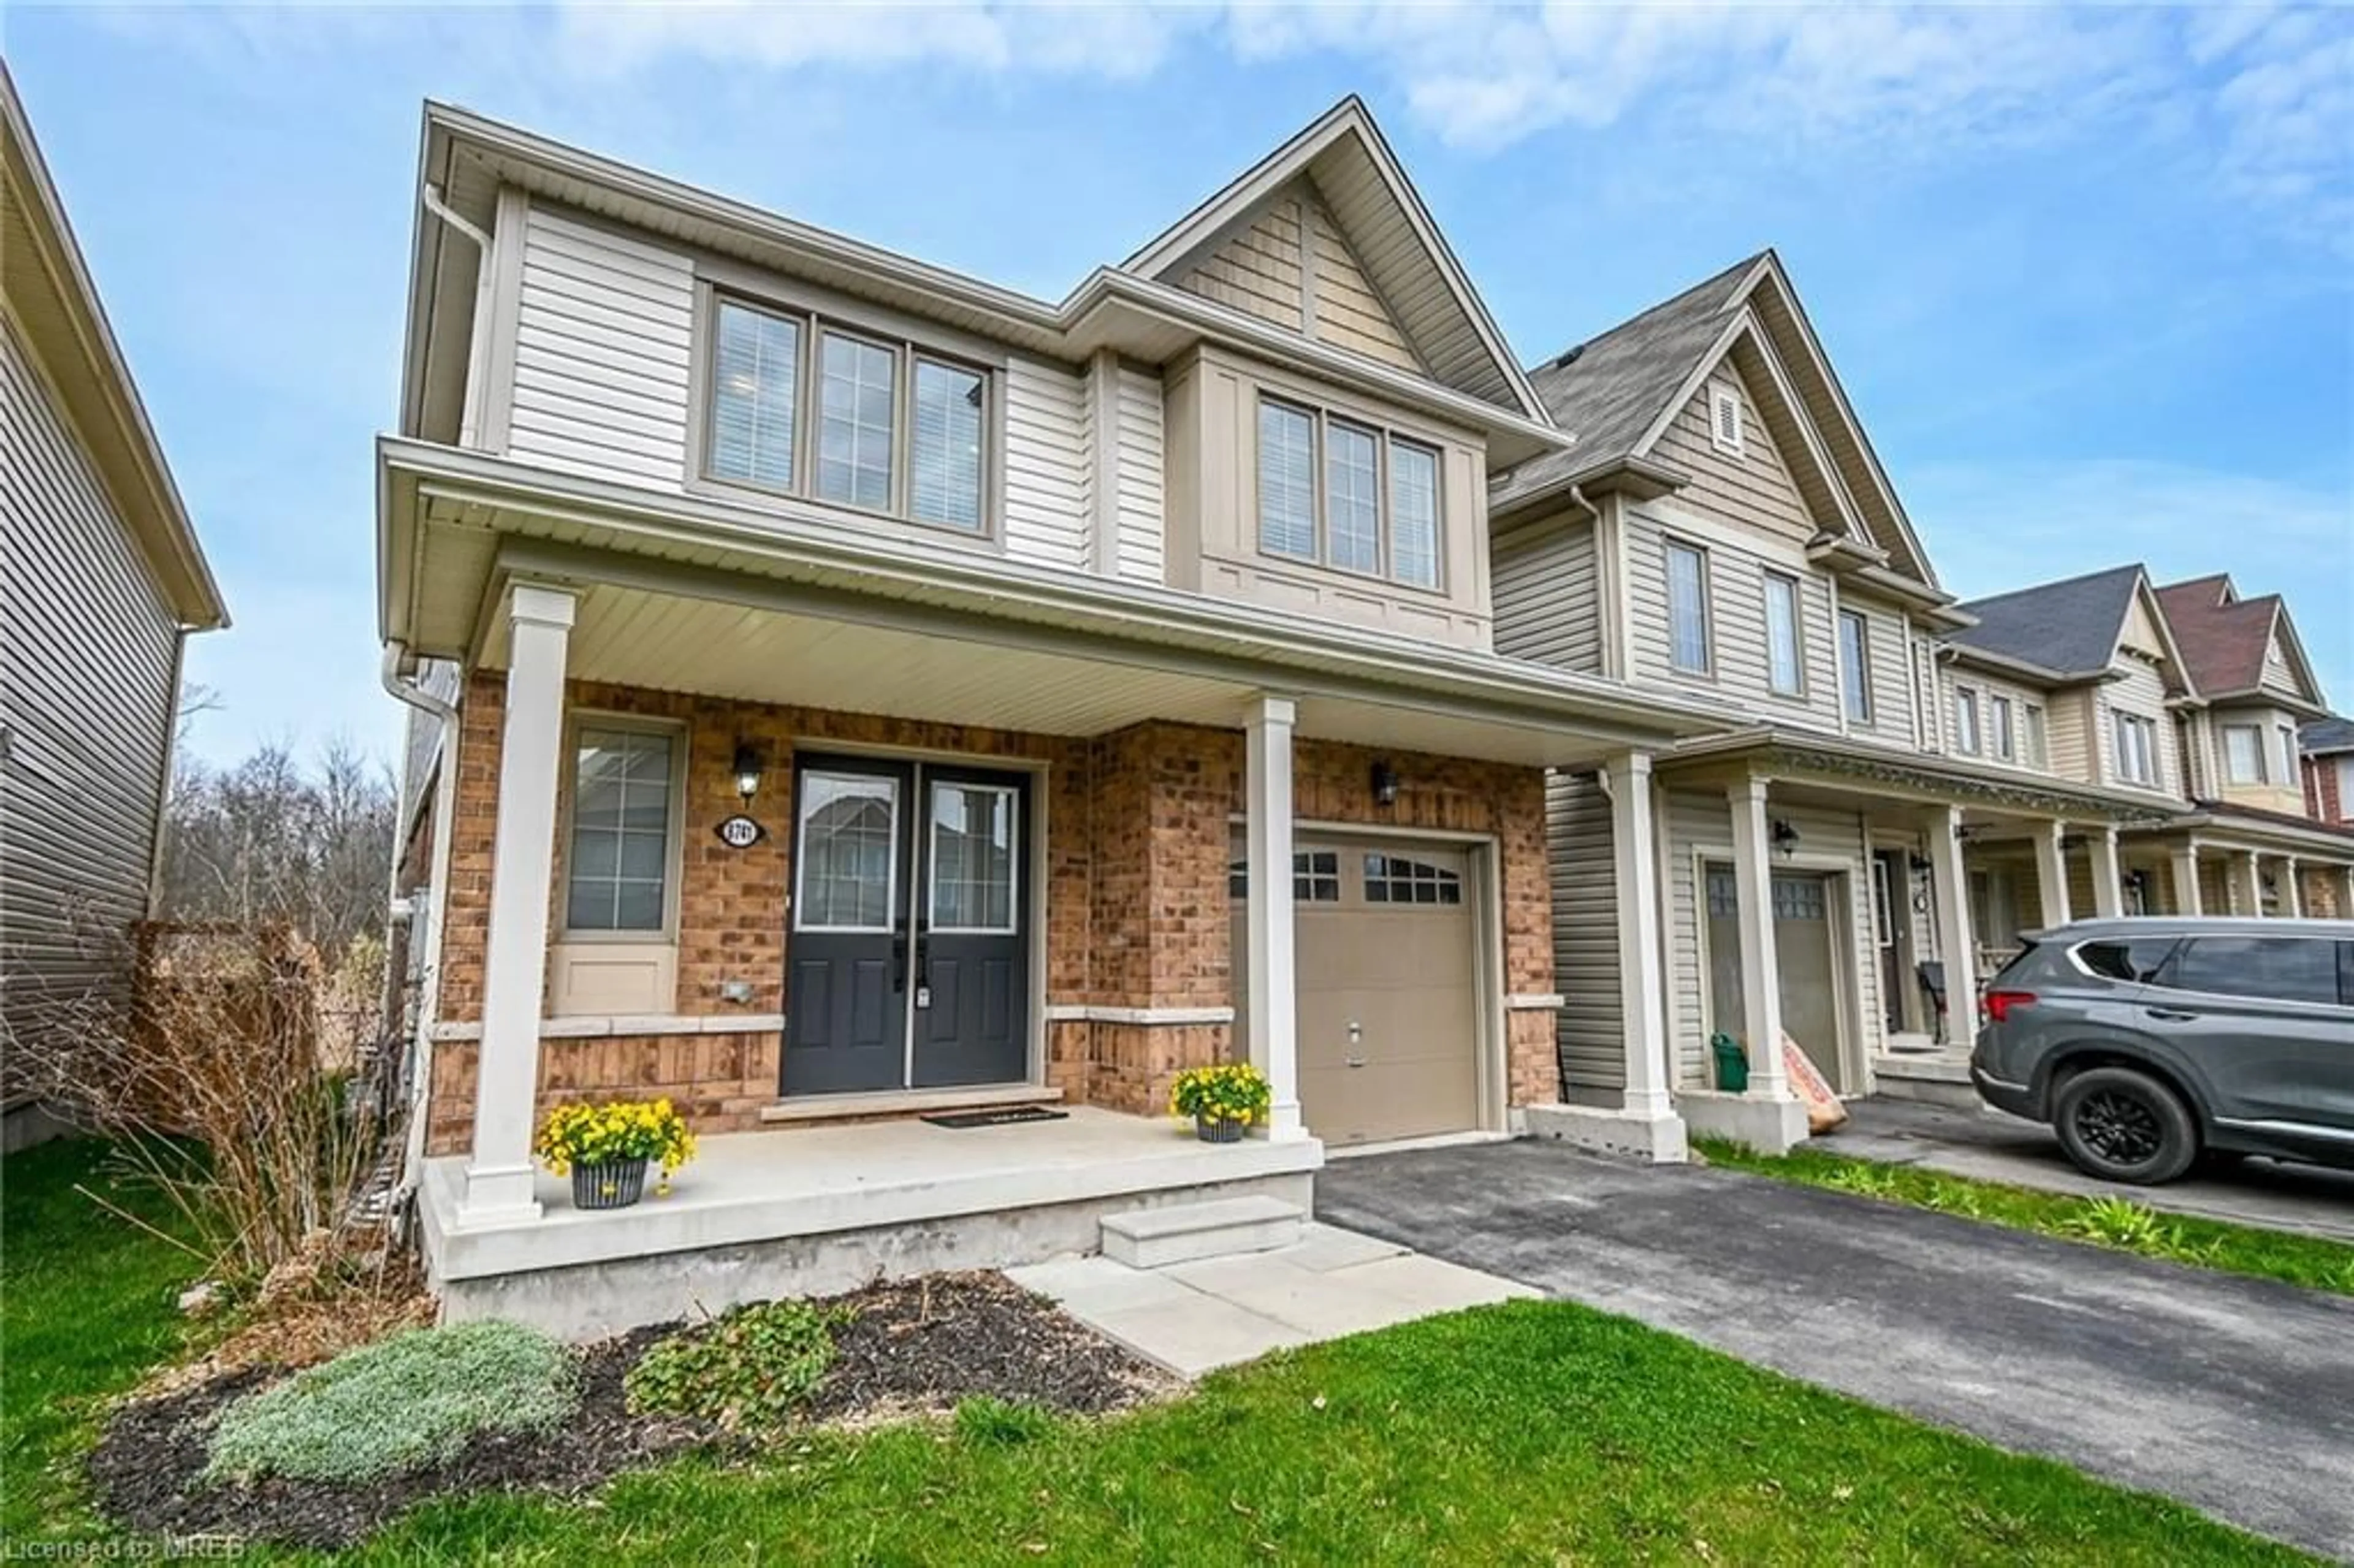 Home with brick exterior material for 8741 Dogwood Crescent Cres, Niagara Falls Ontario L2H 0K9